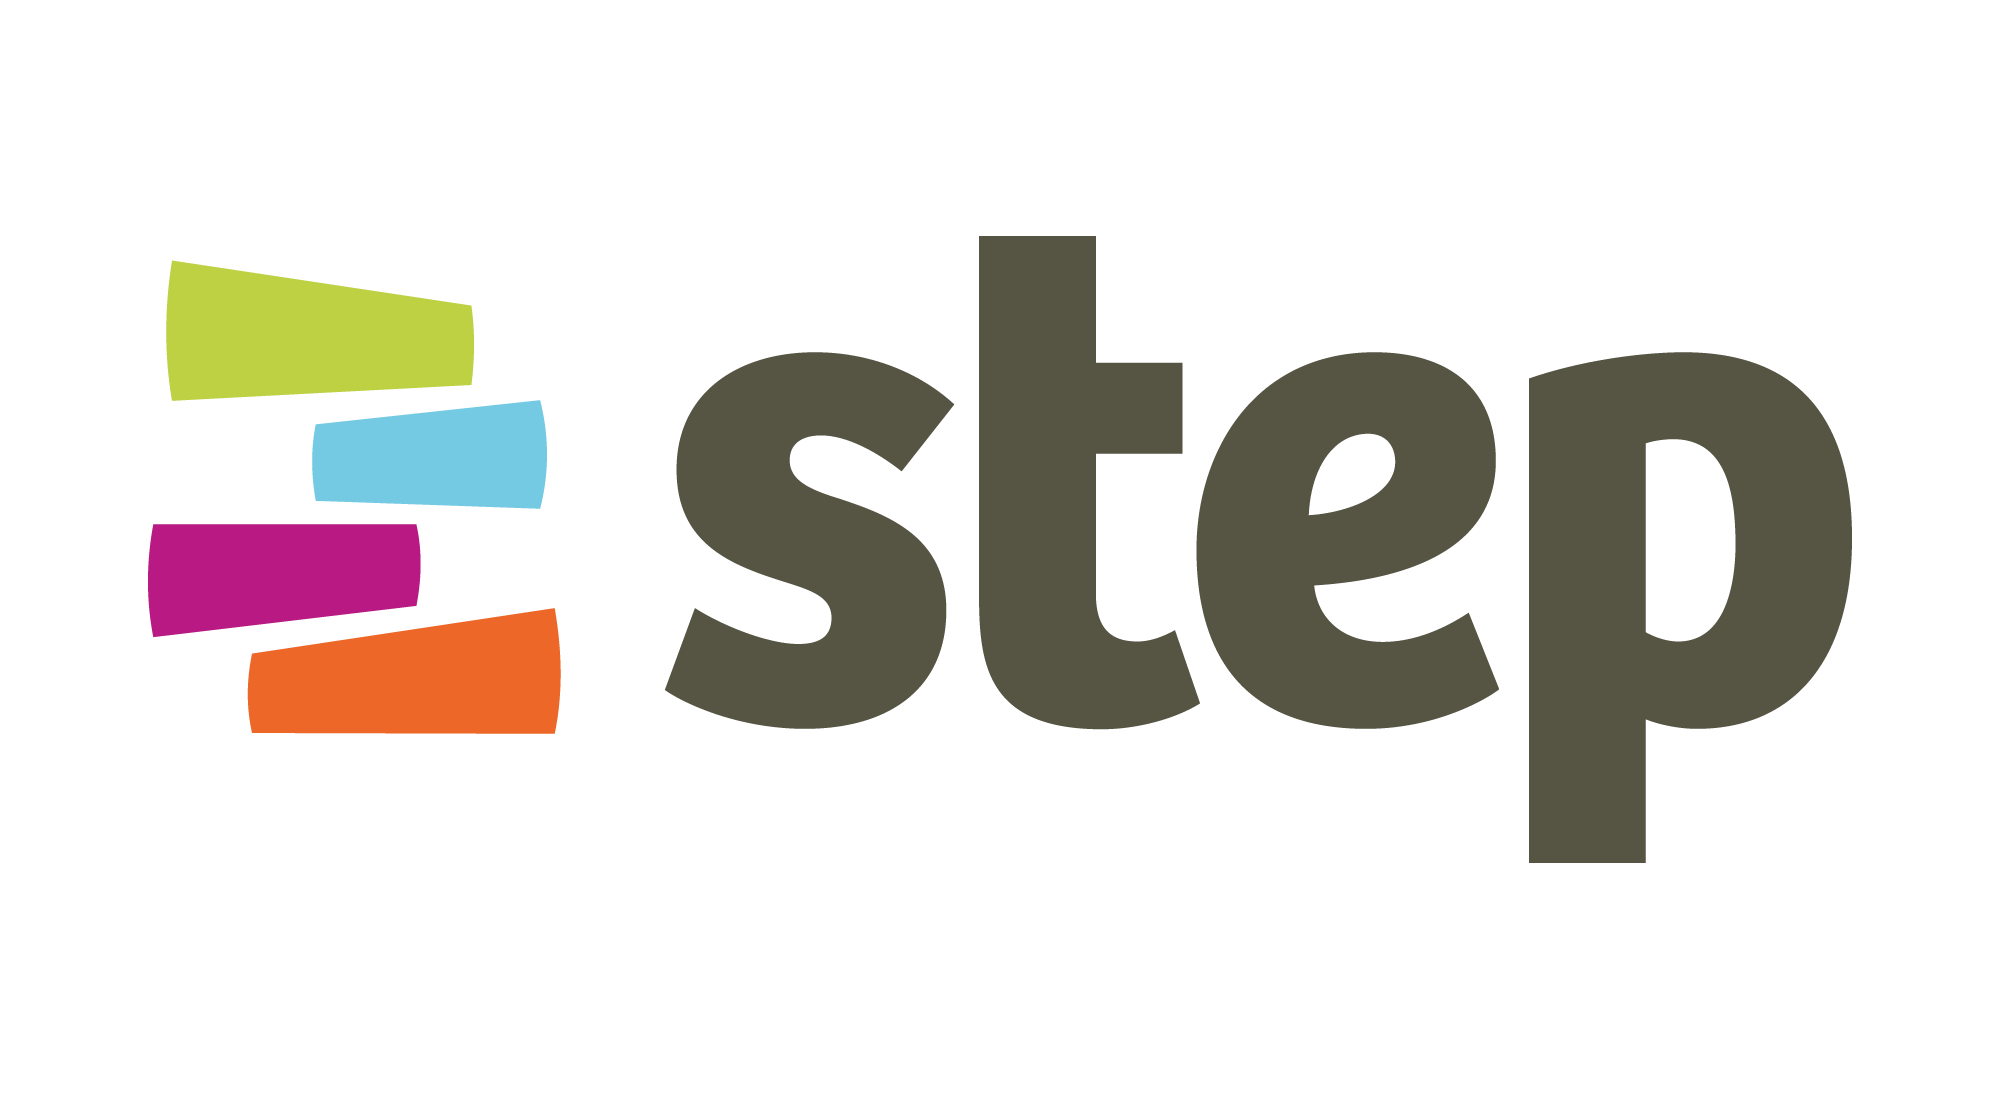 Написать step. Step logo. Step by Step логотип. "First Step" лого. Степ бай степ логотип.